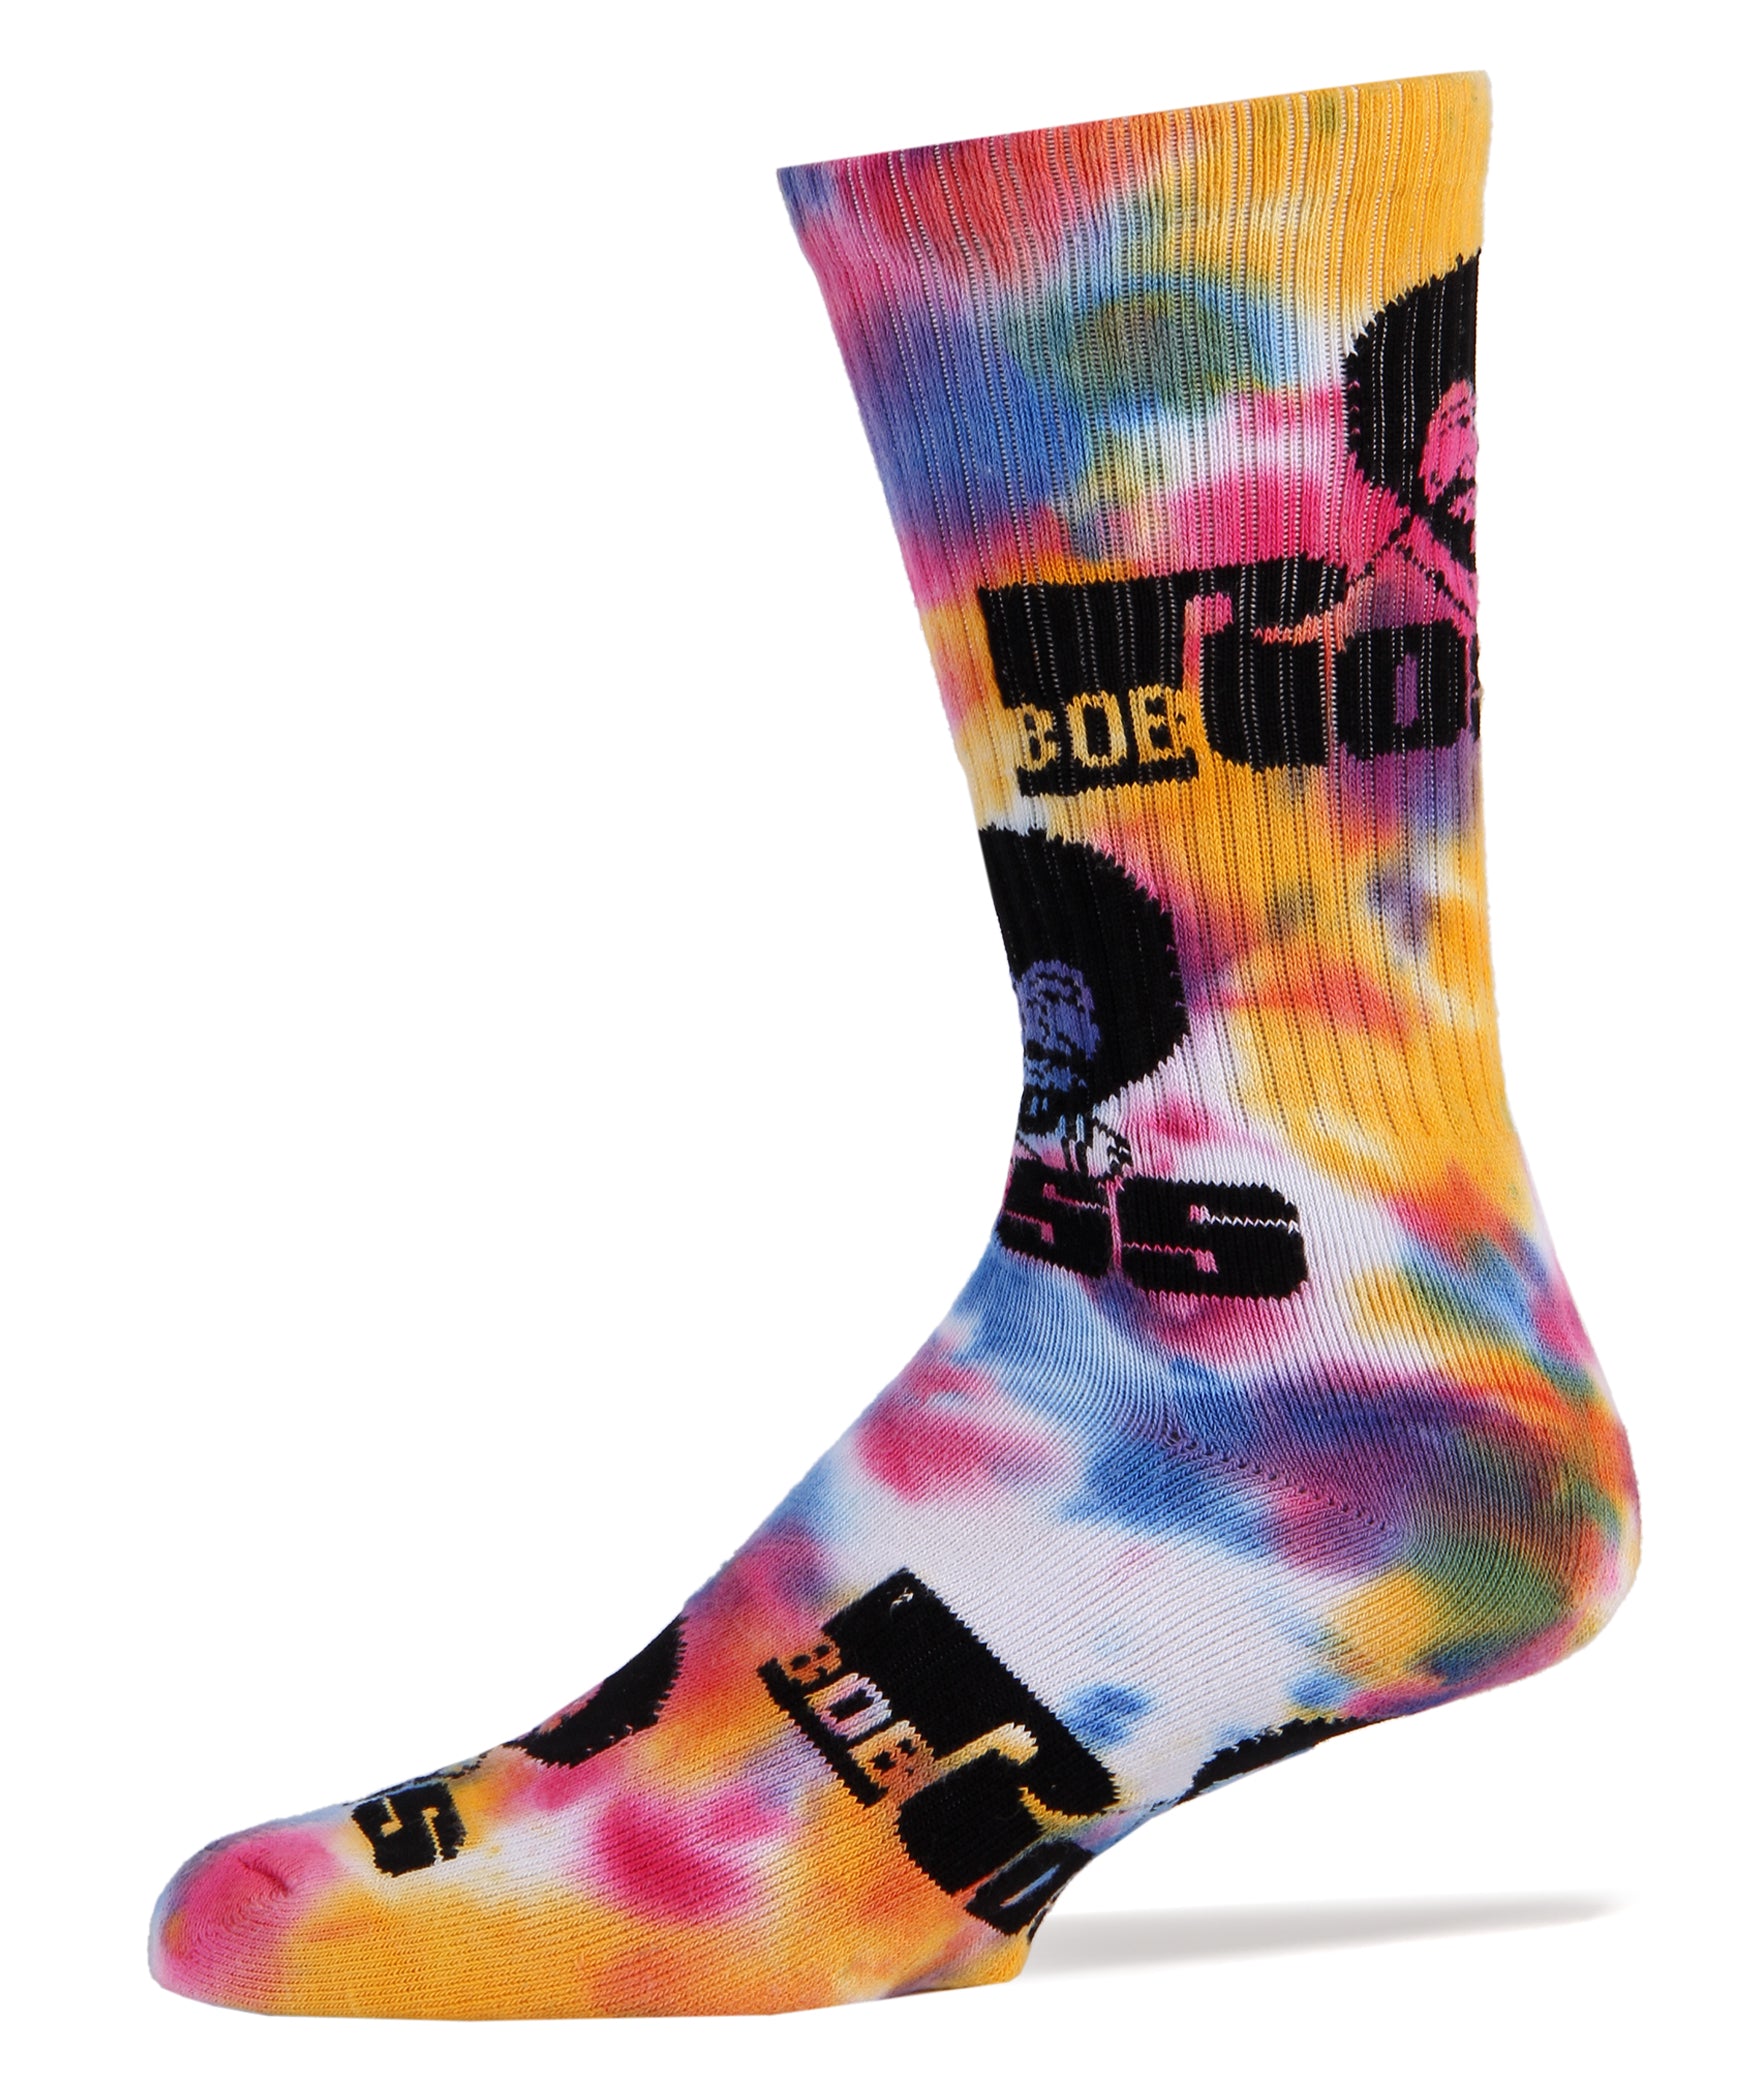 Tie Dye Socks, Unique and Fun Colors